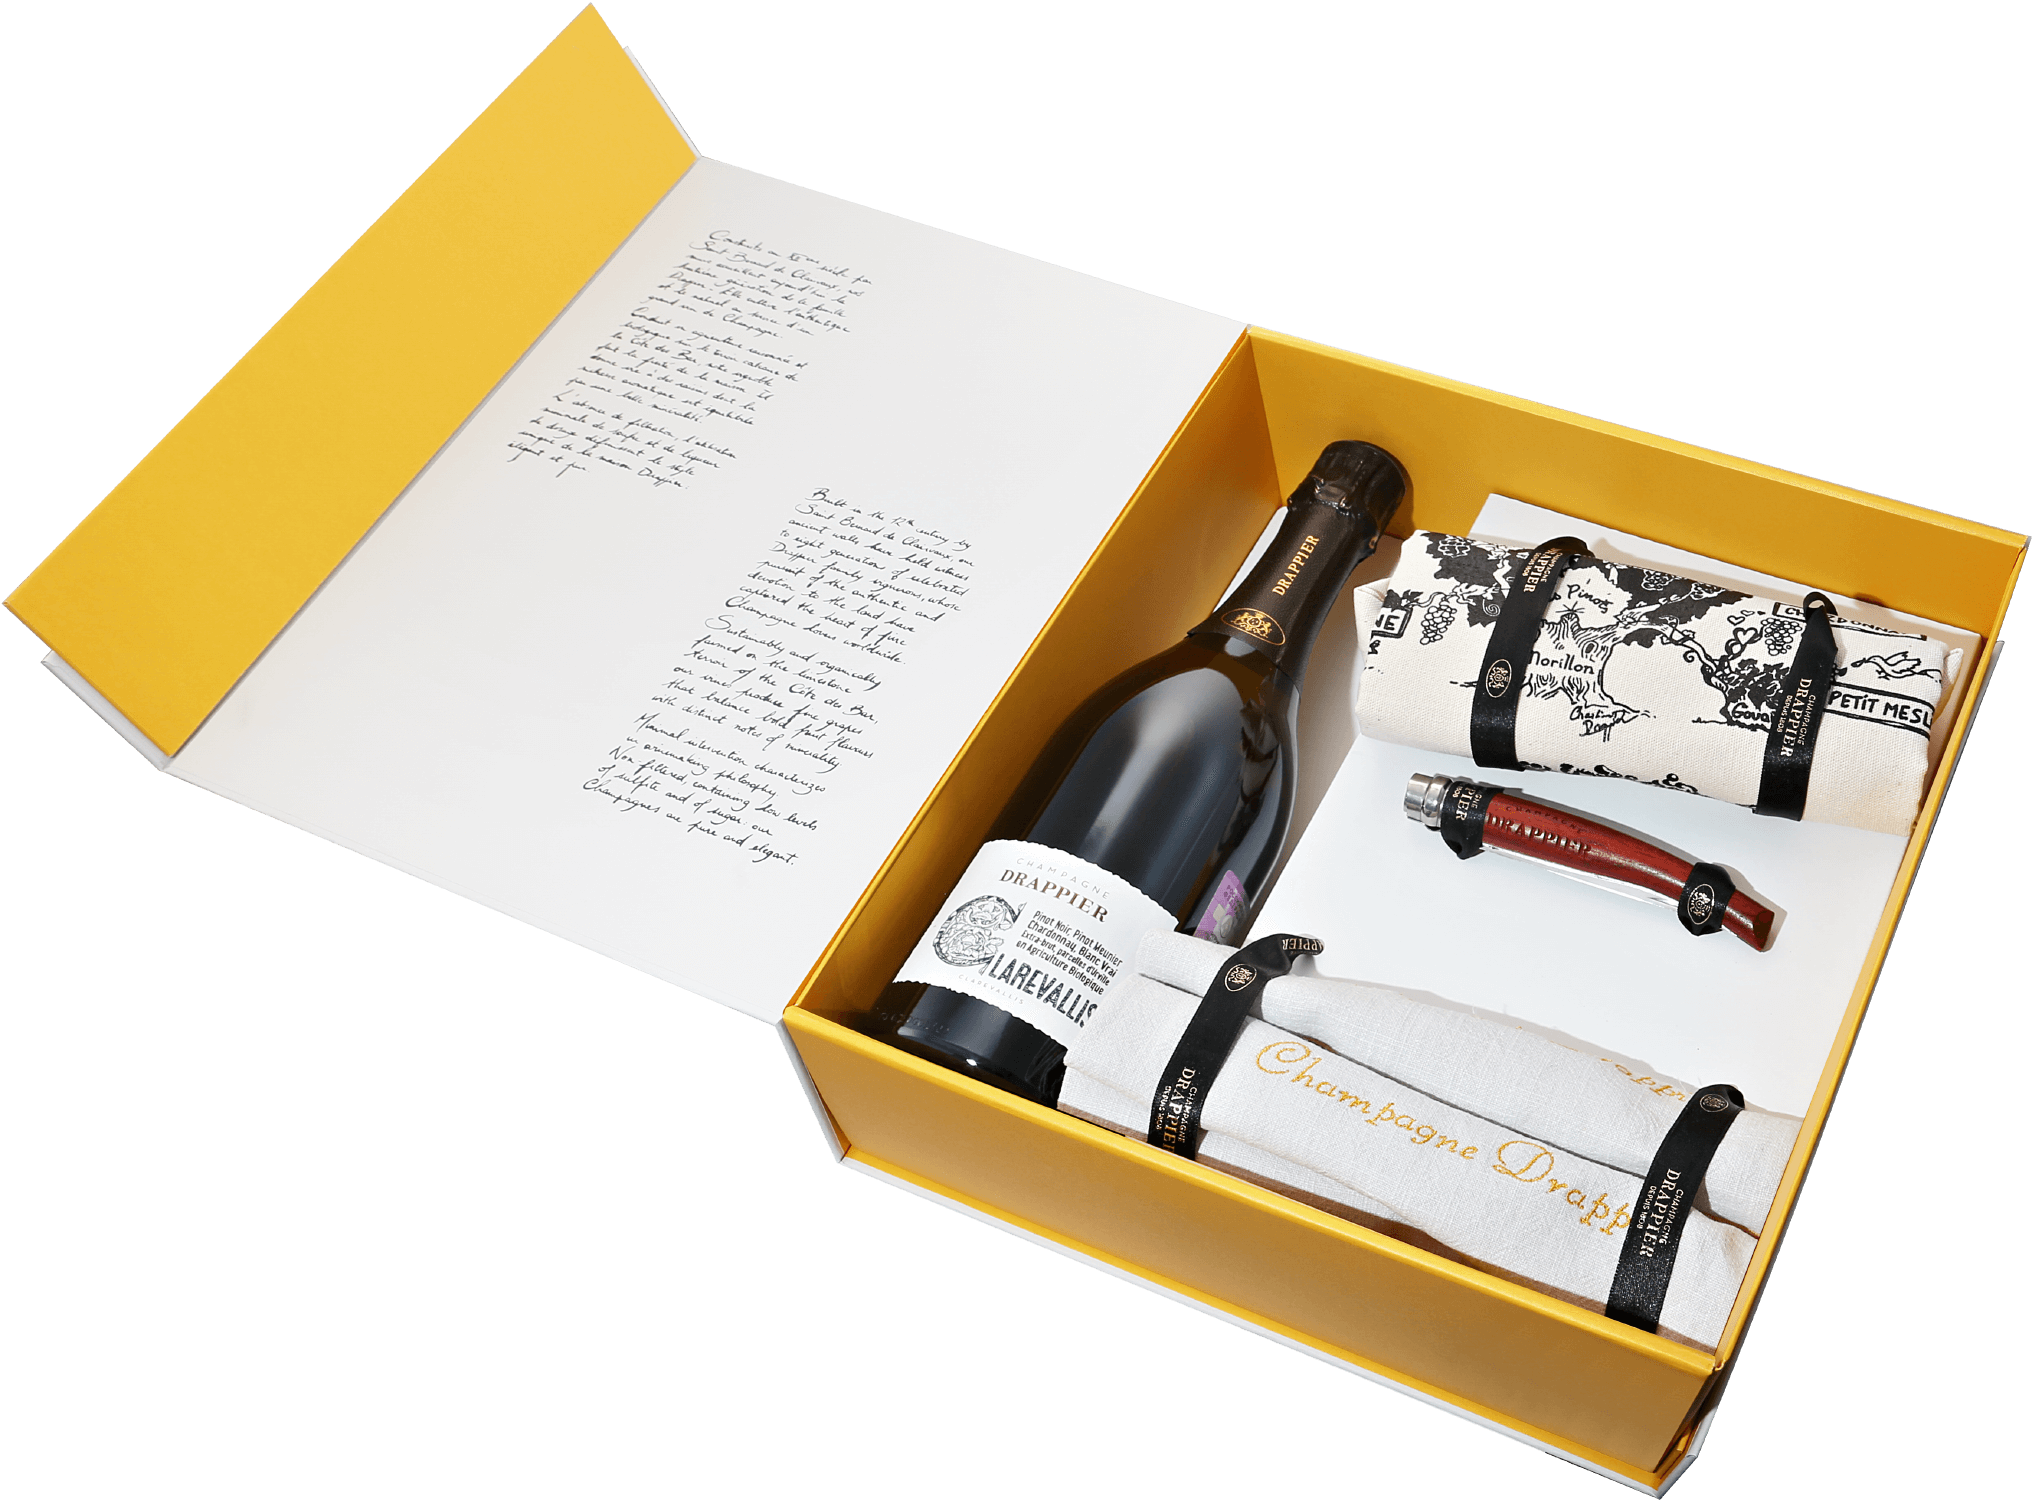 Drappier Clarevallis Champagne AOC (gift box) chablis aoc maison olivier tricon gift box